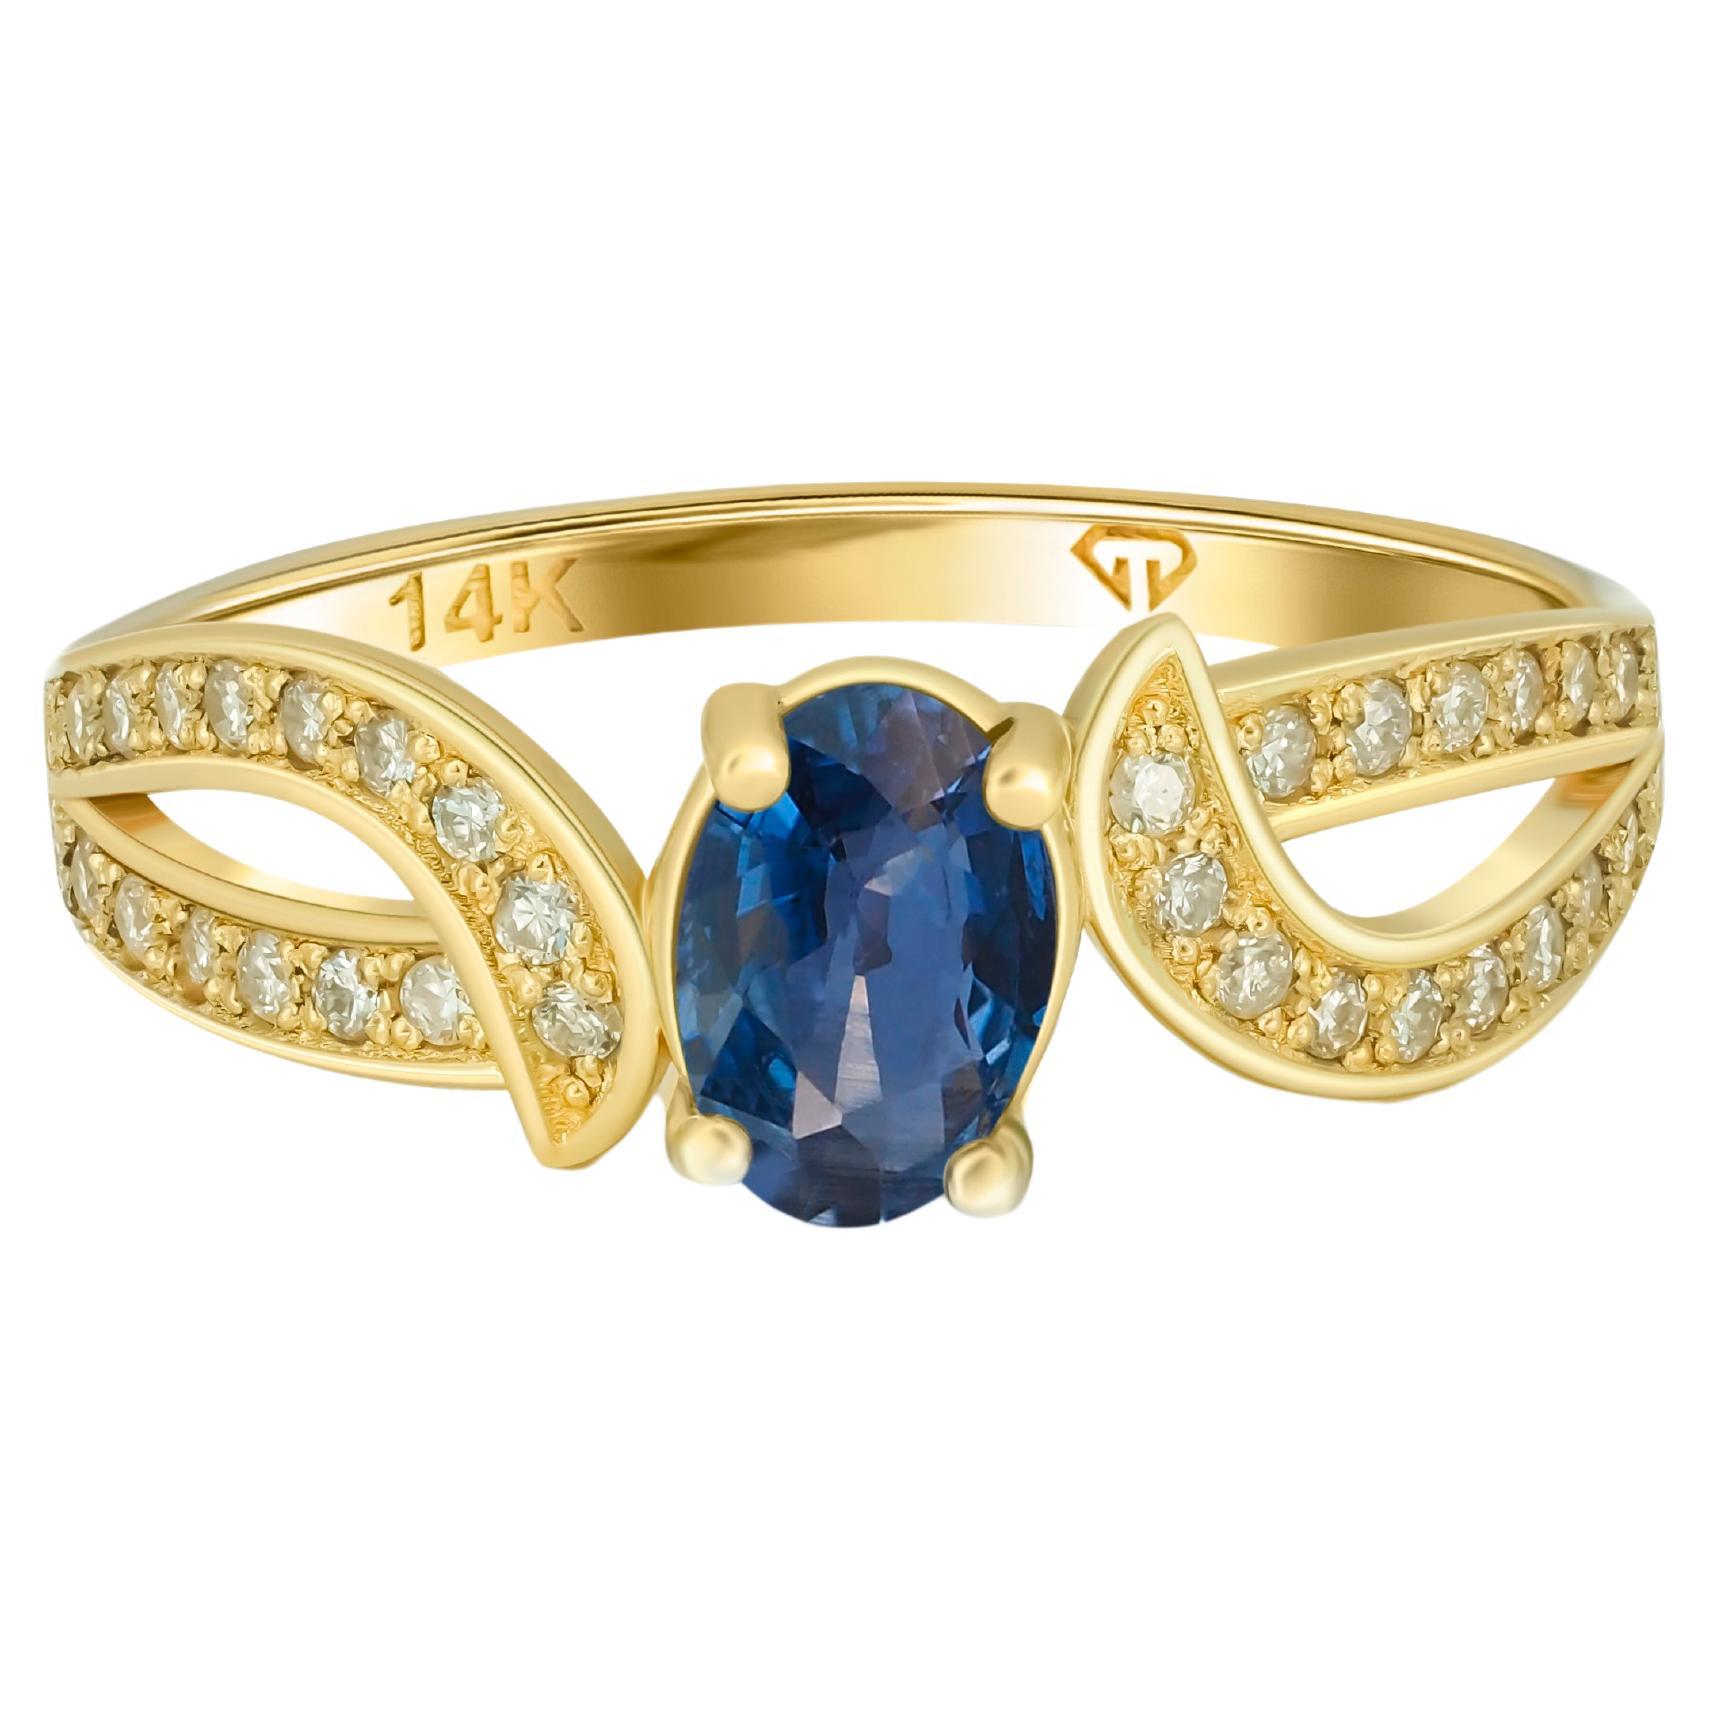 Genuine sapphire 14k gold ring. 